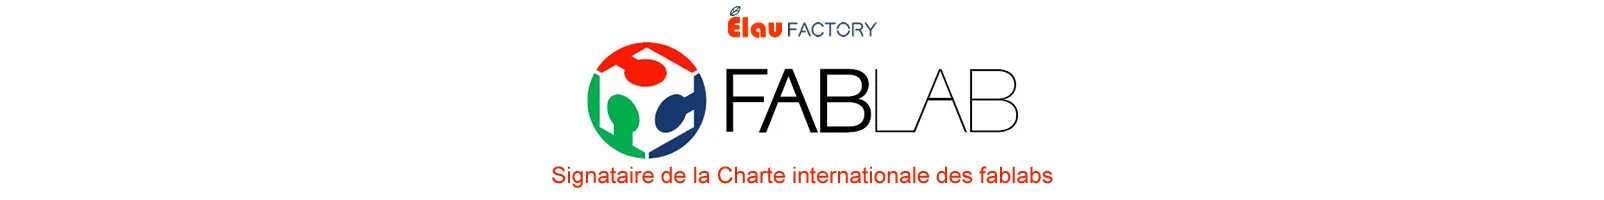 Image banniere charte fablabs elau factory